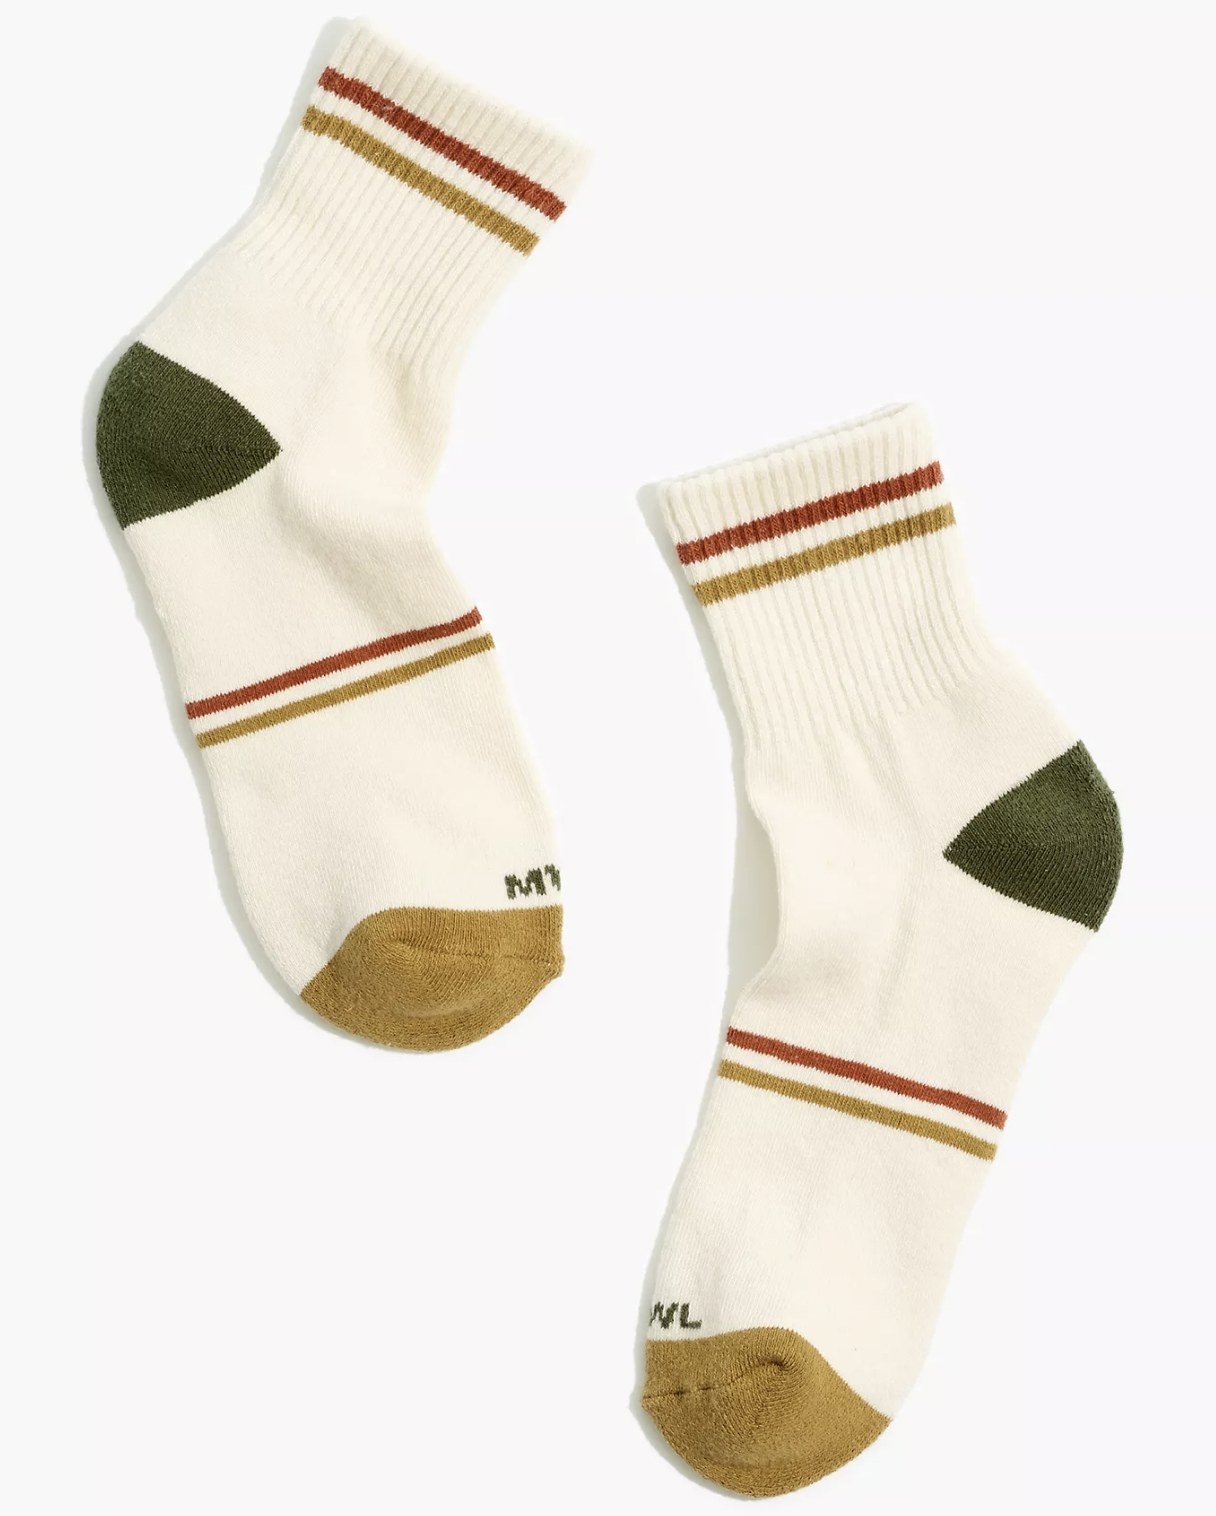 flatlay of the socks with varsity stripes on them